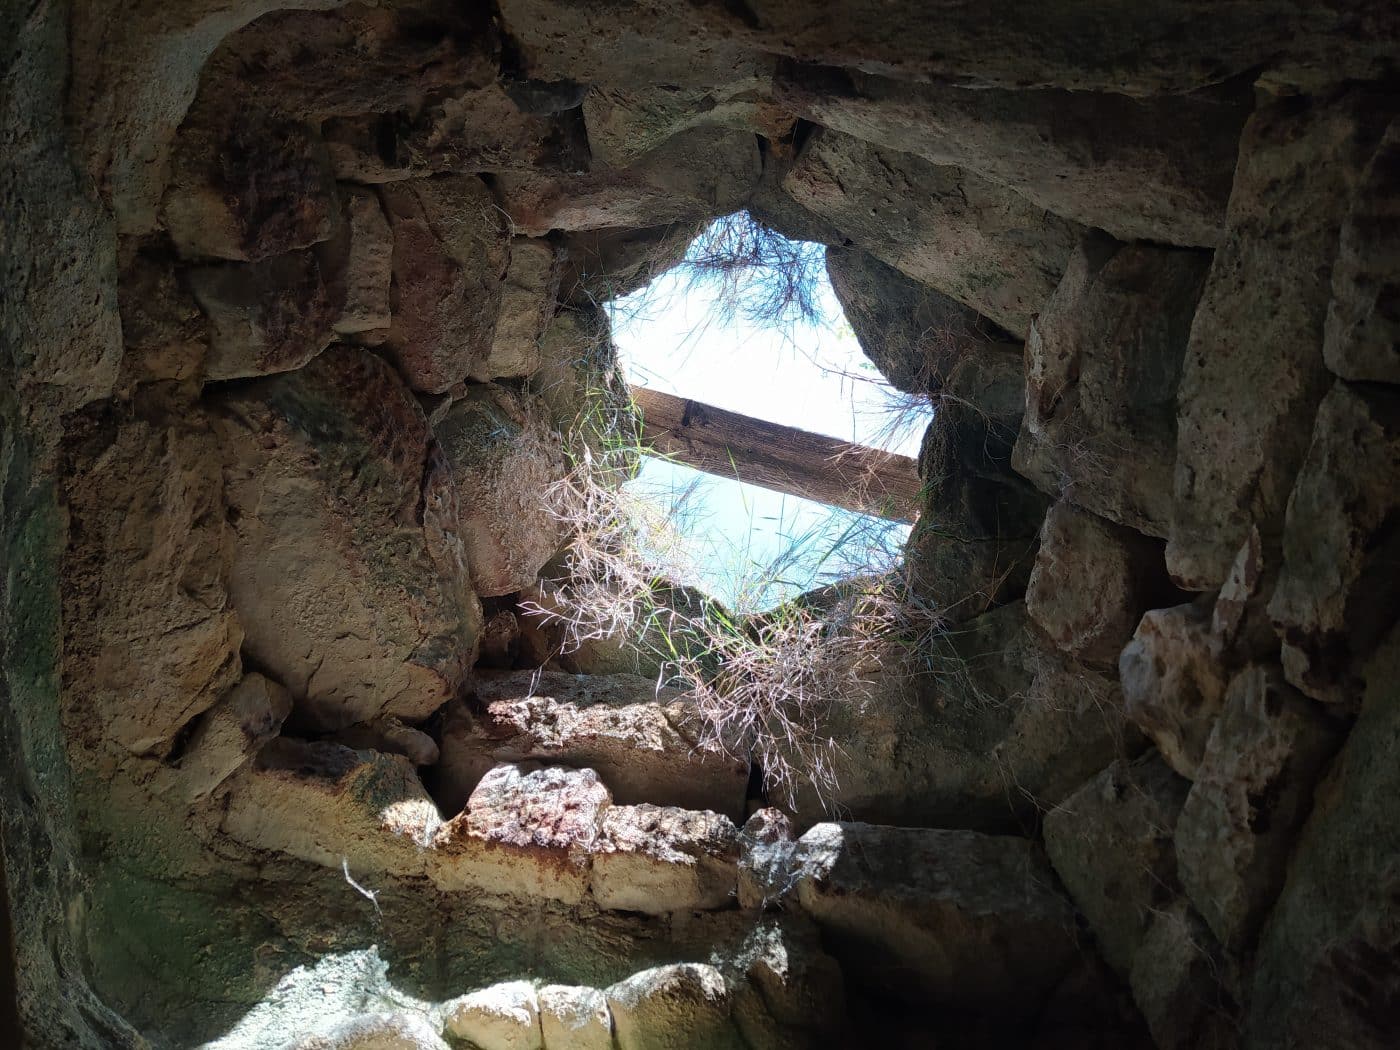 Riscos de Bilibio (VII): la iglesia rupestre de Páceta 6